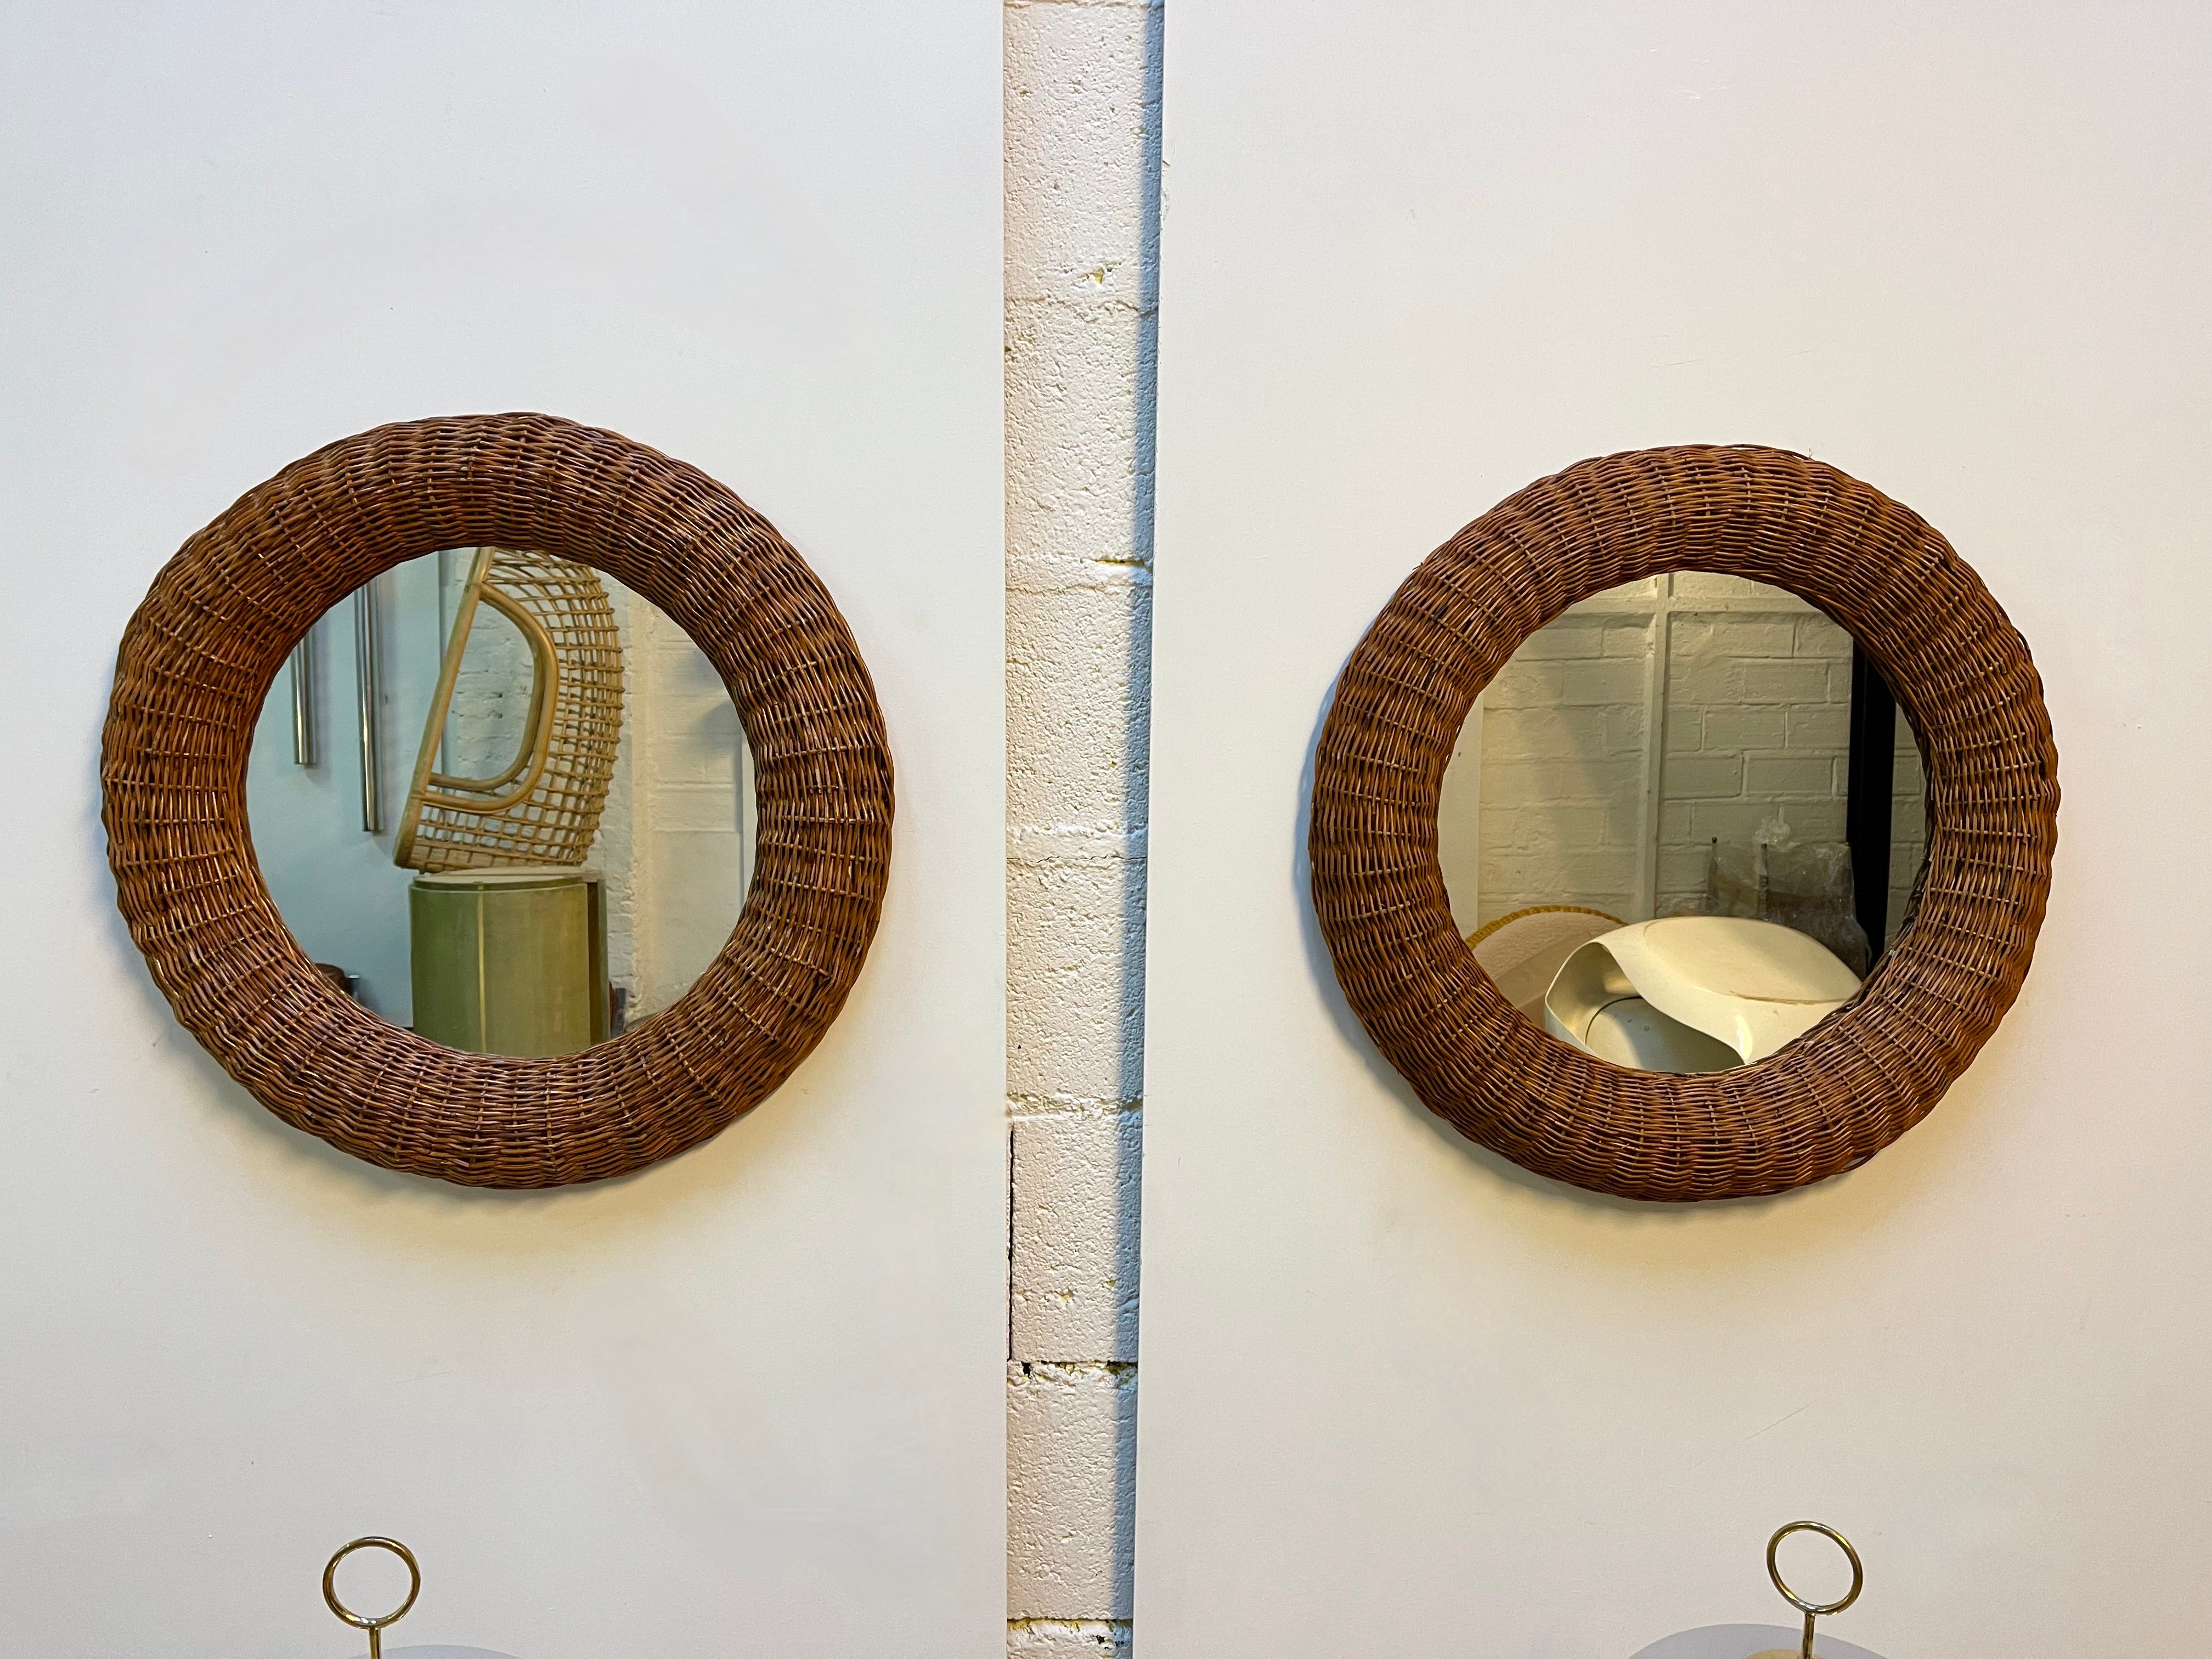 Pair of round braided rattan wicker mirror. Artisanal work in the mood of Mario Lopez Torres, Galerie Maison & Jardin, Jansen, Dal Vera, Bamboo Vivai Del Sud, Hollywood Regency, Arpex International.